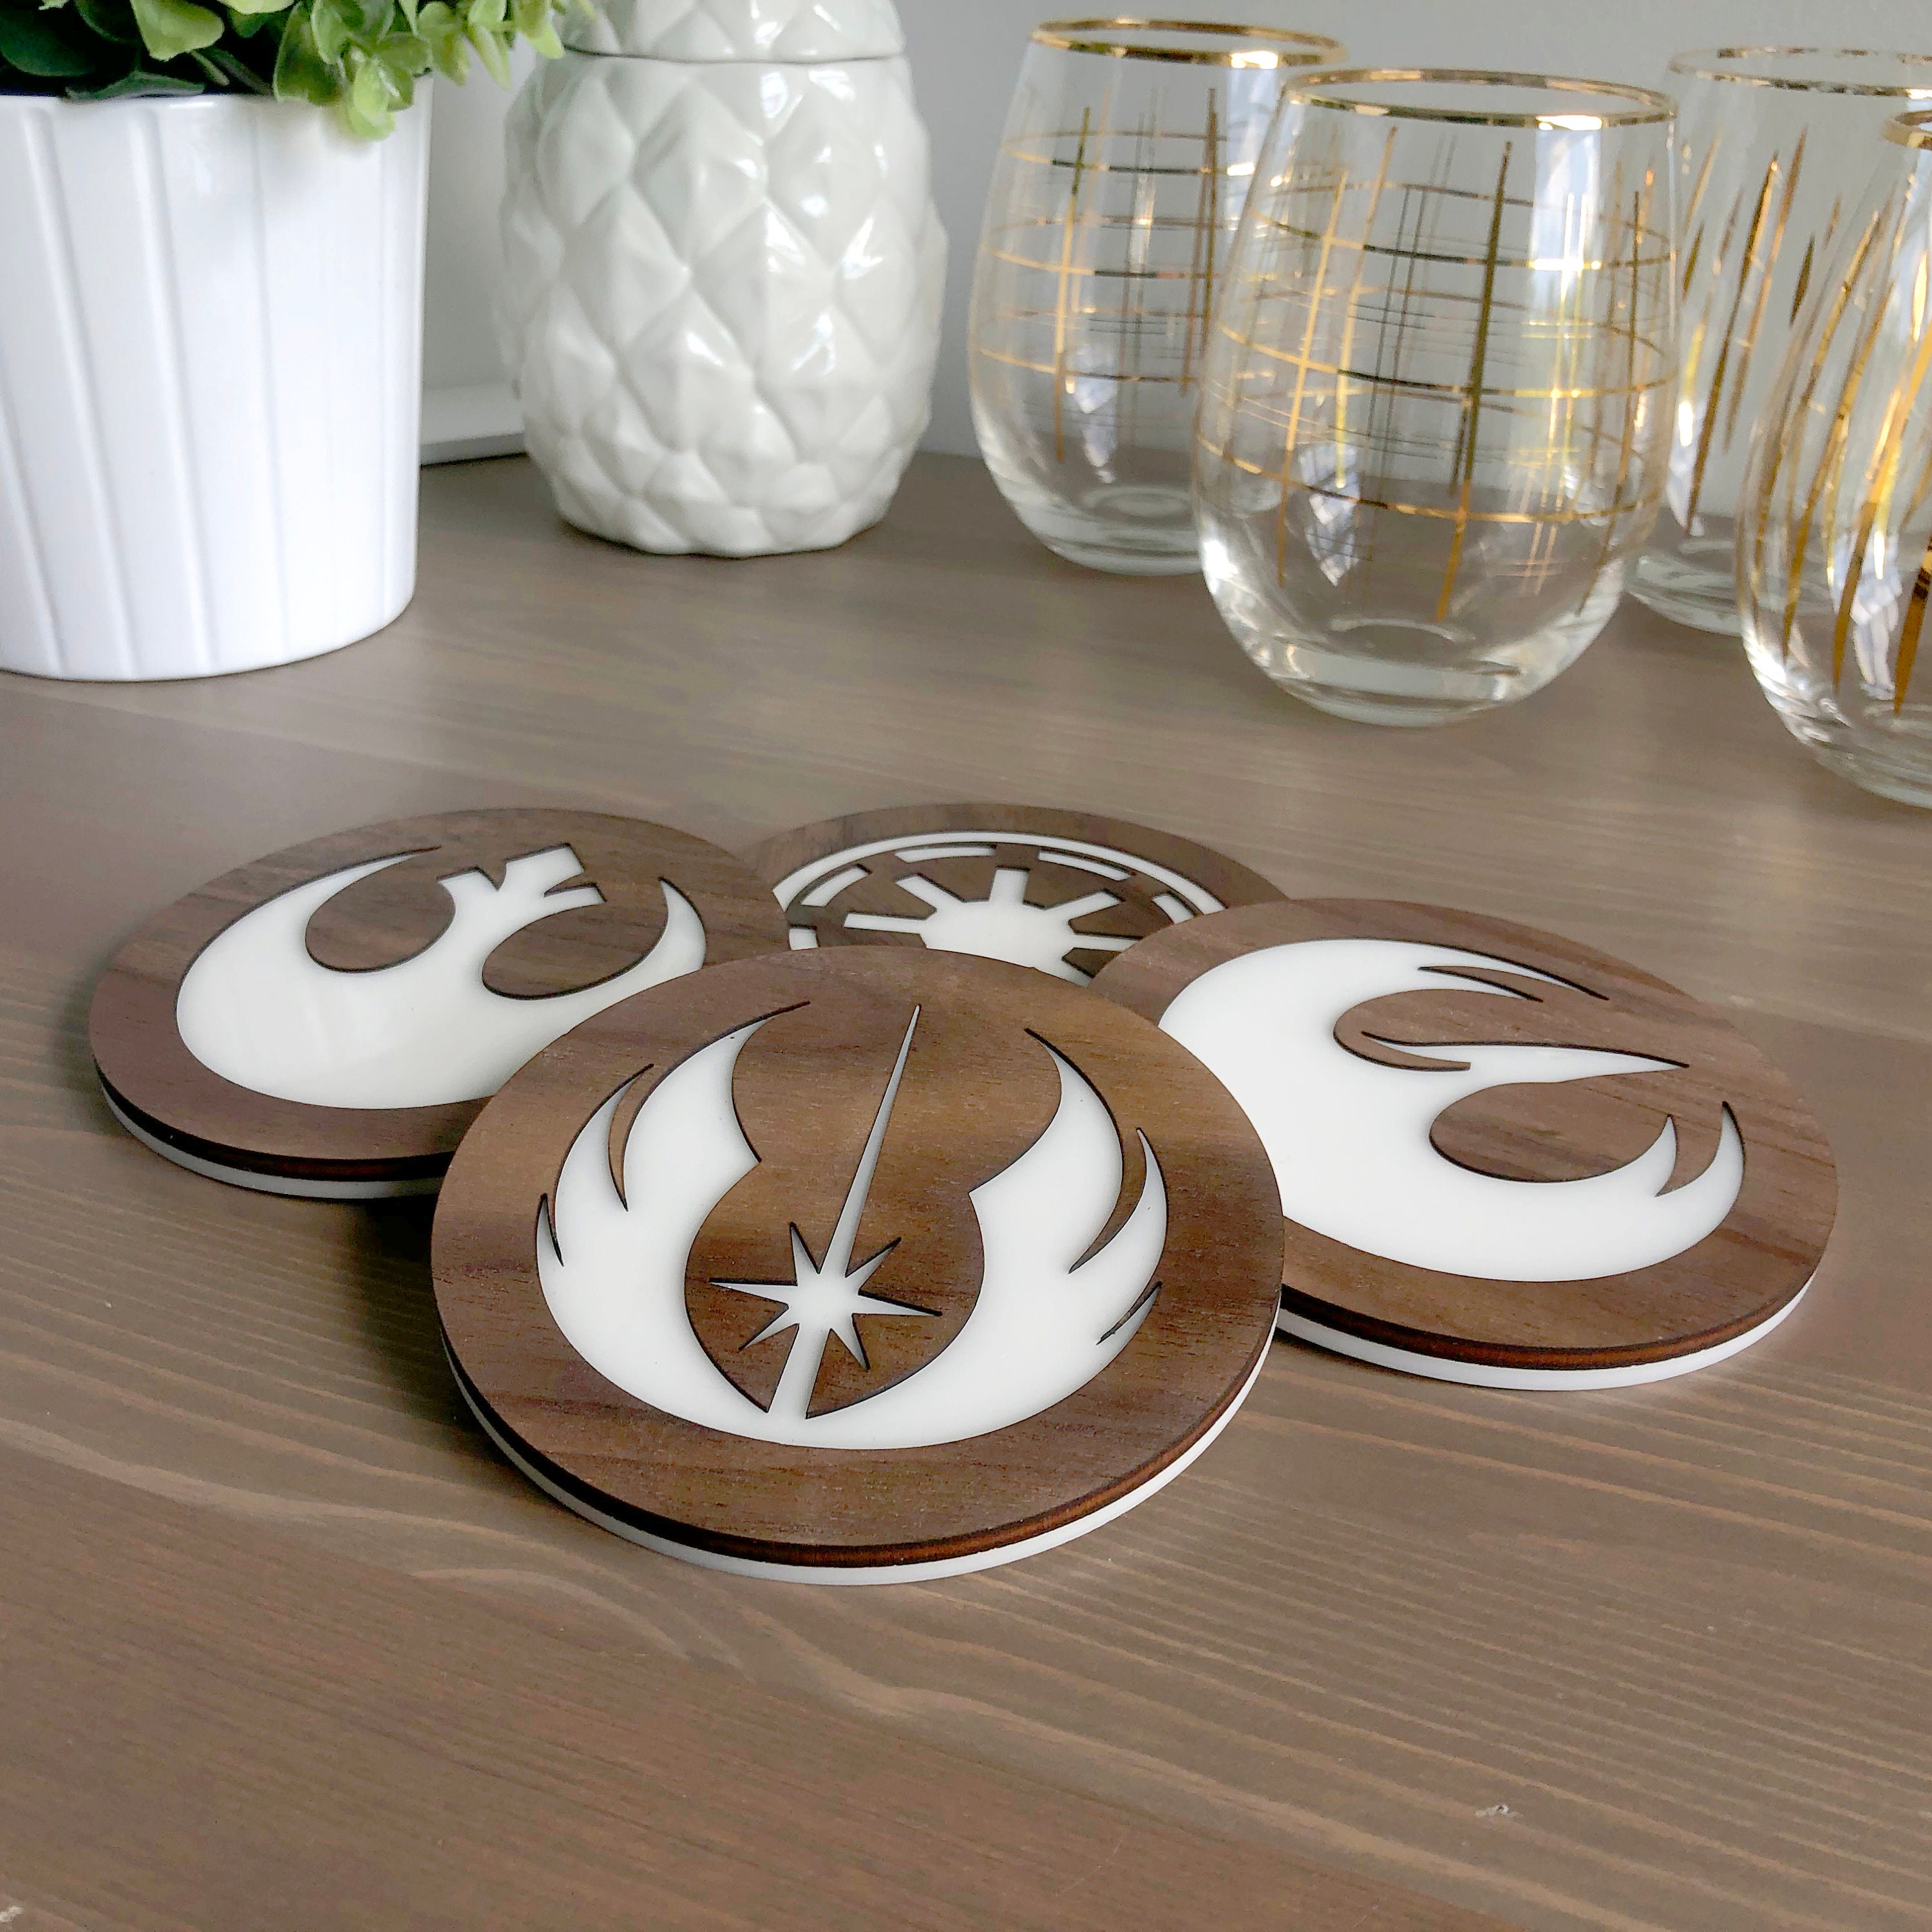 Star Wars Inspired Wood Coaster Set